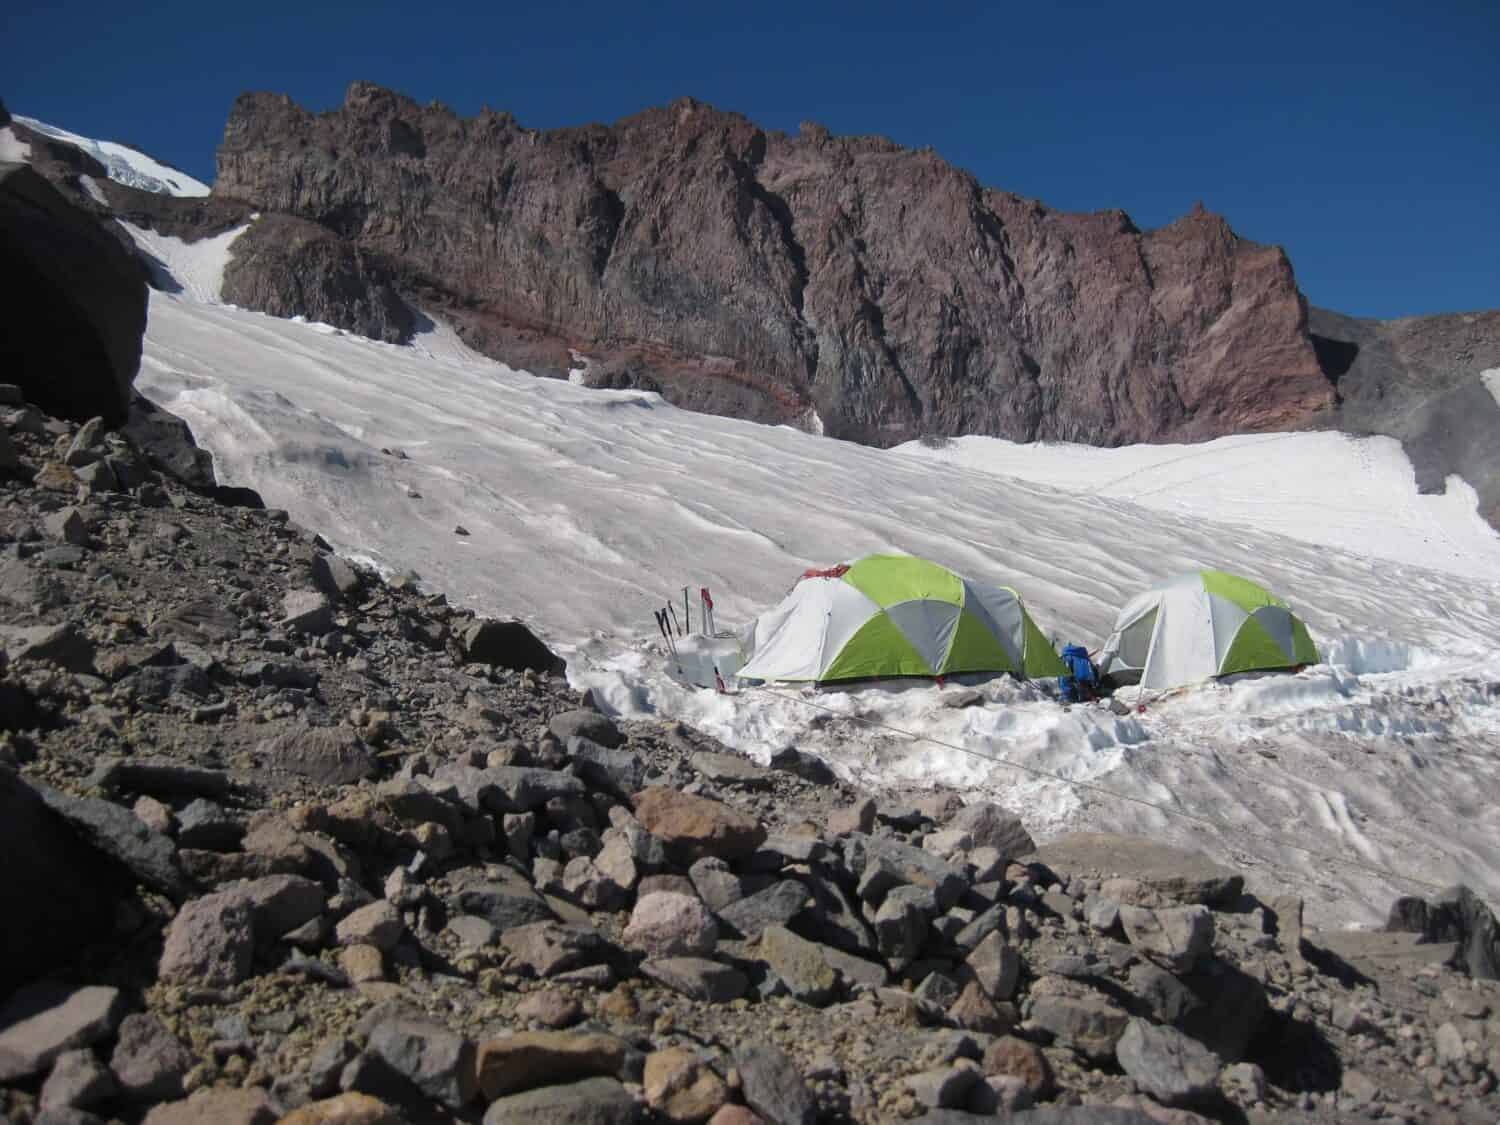 Tents at Camp Muir, Climbing Mount Rainier